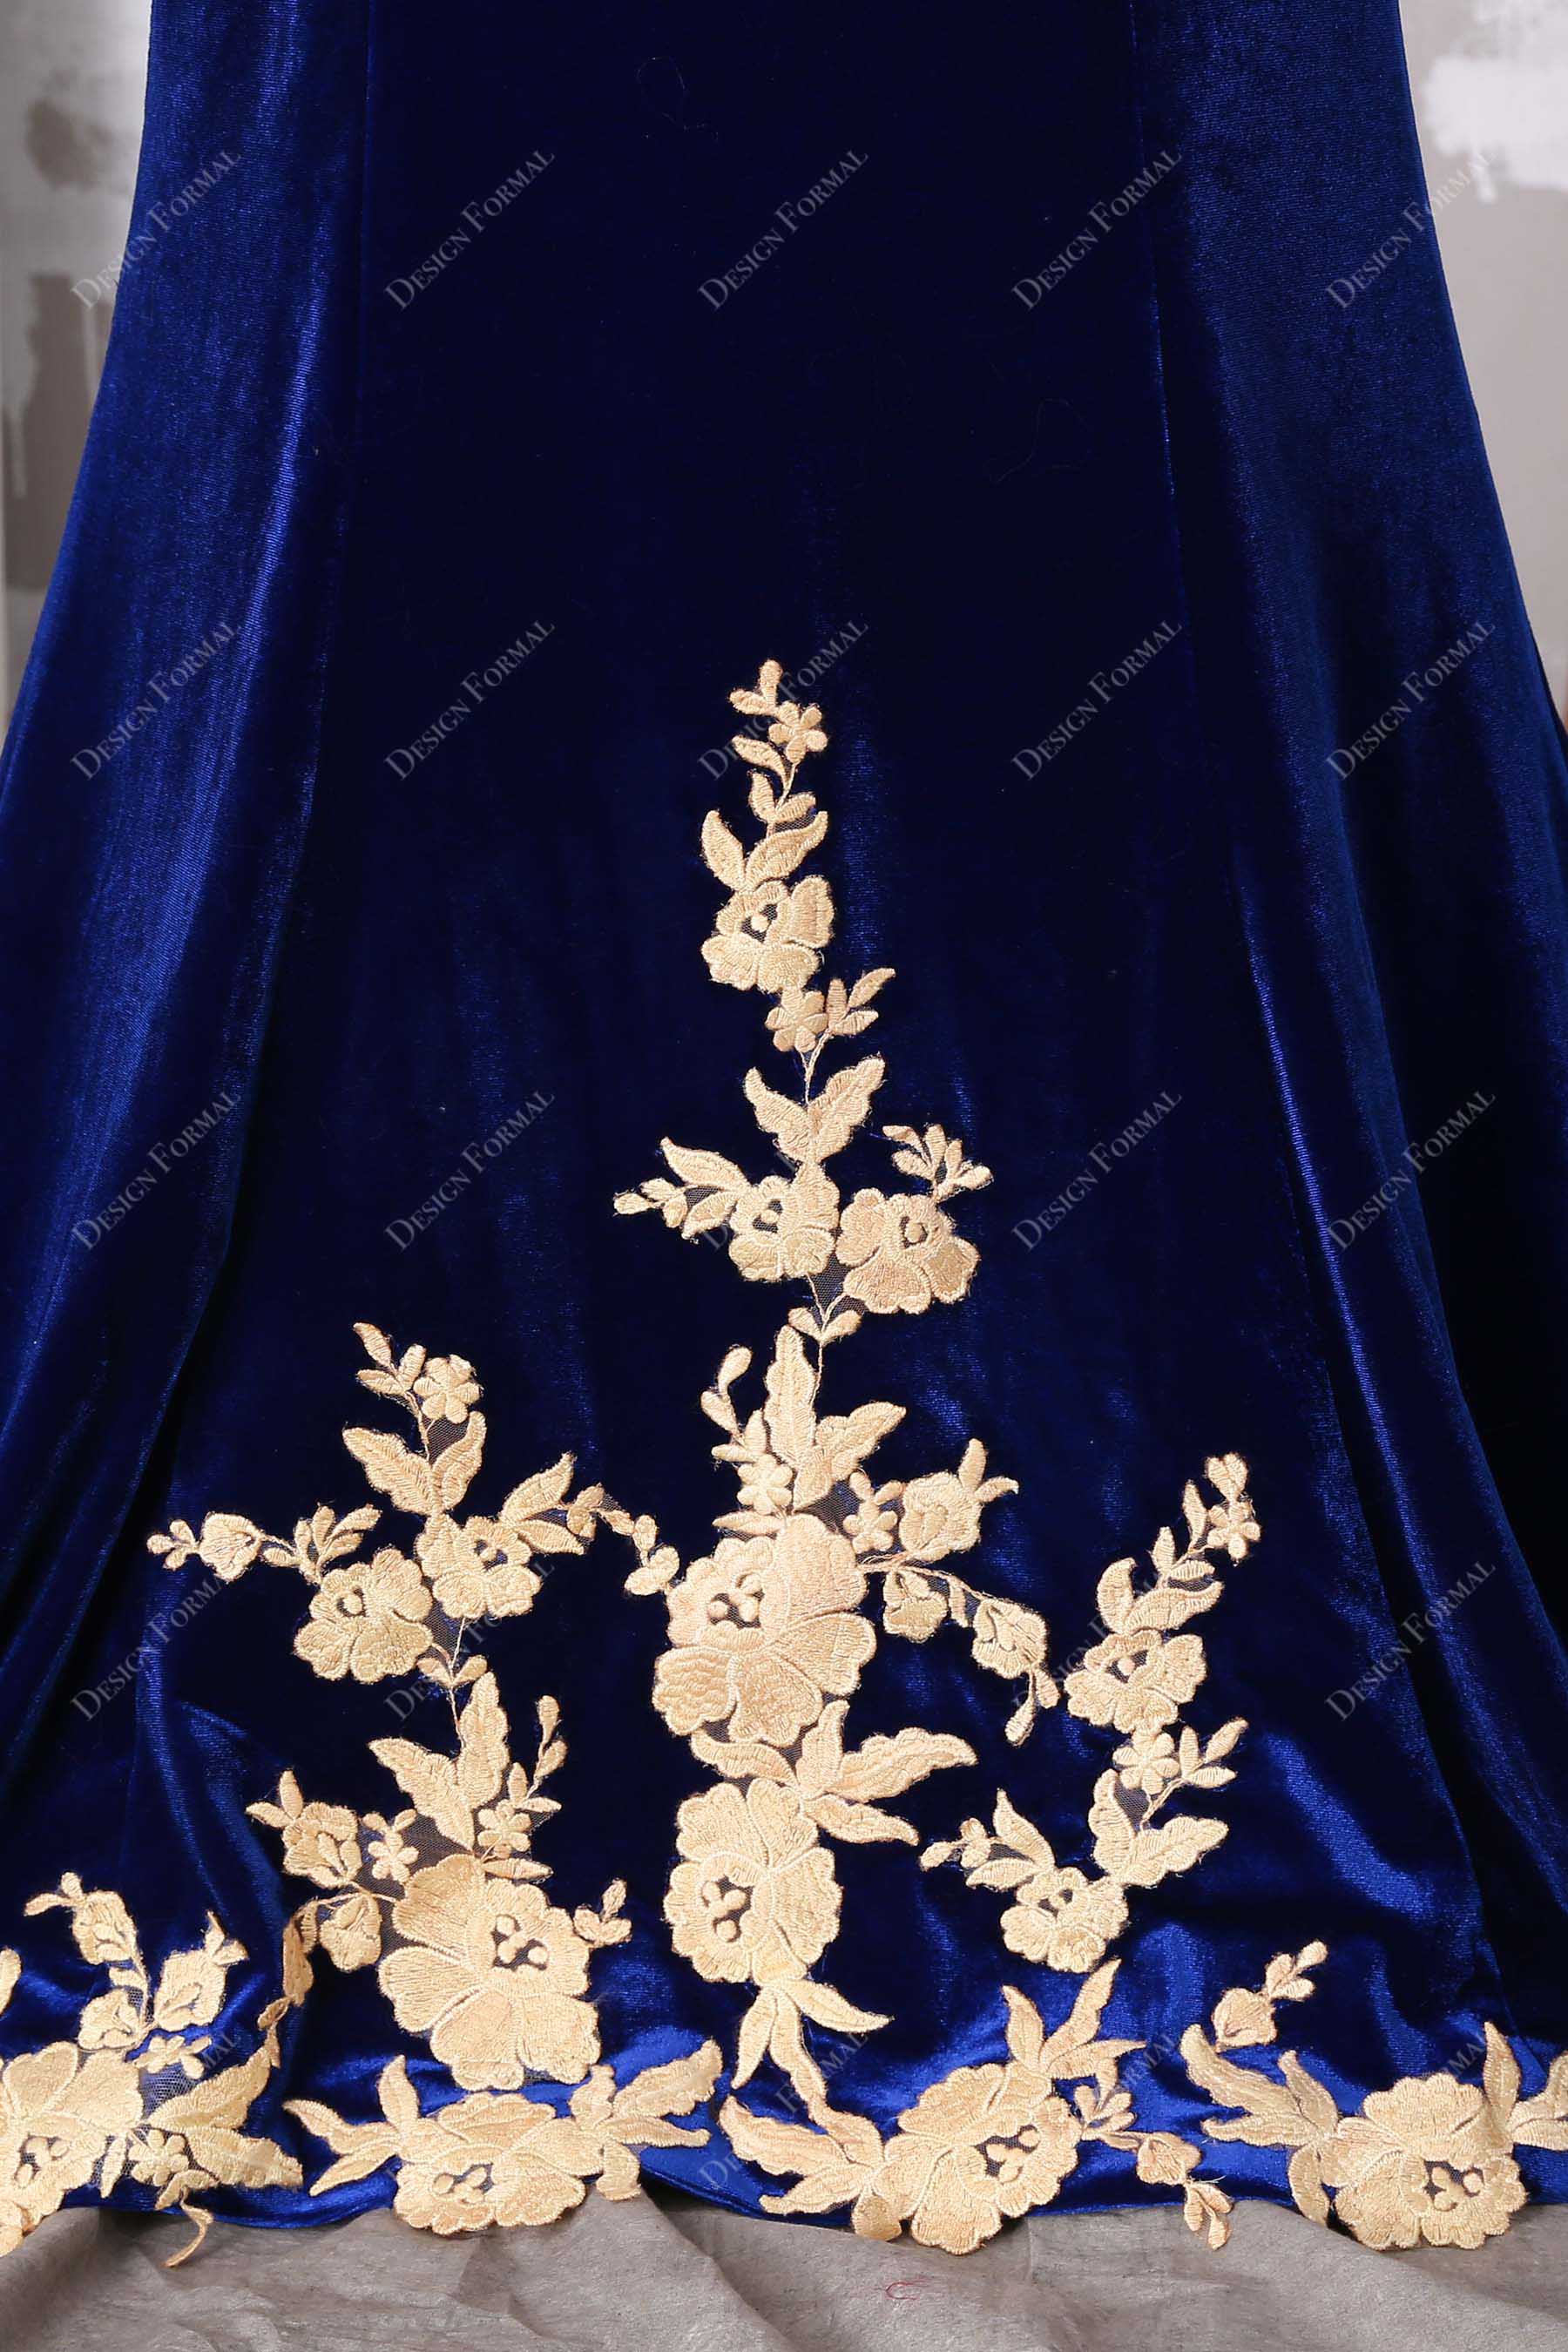 royal blue velvet dress with gold lace